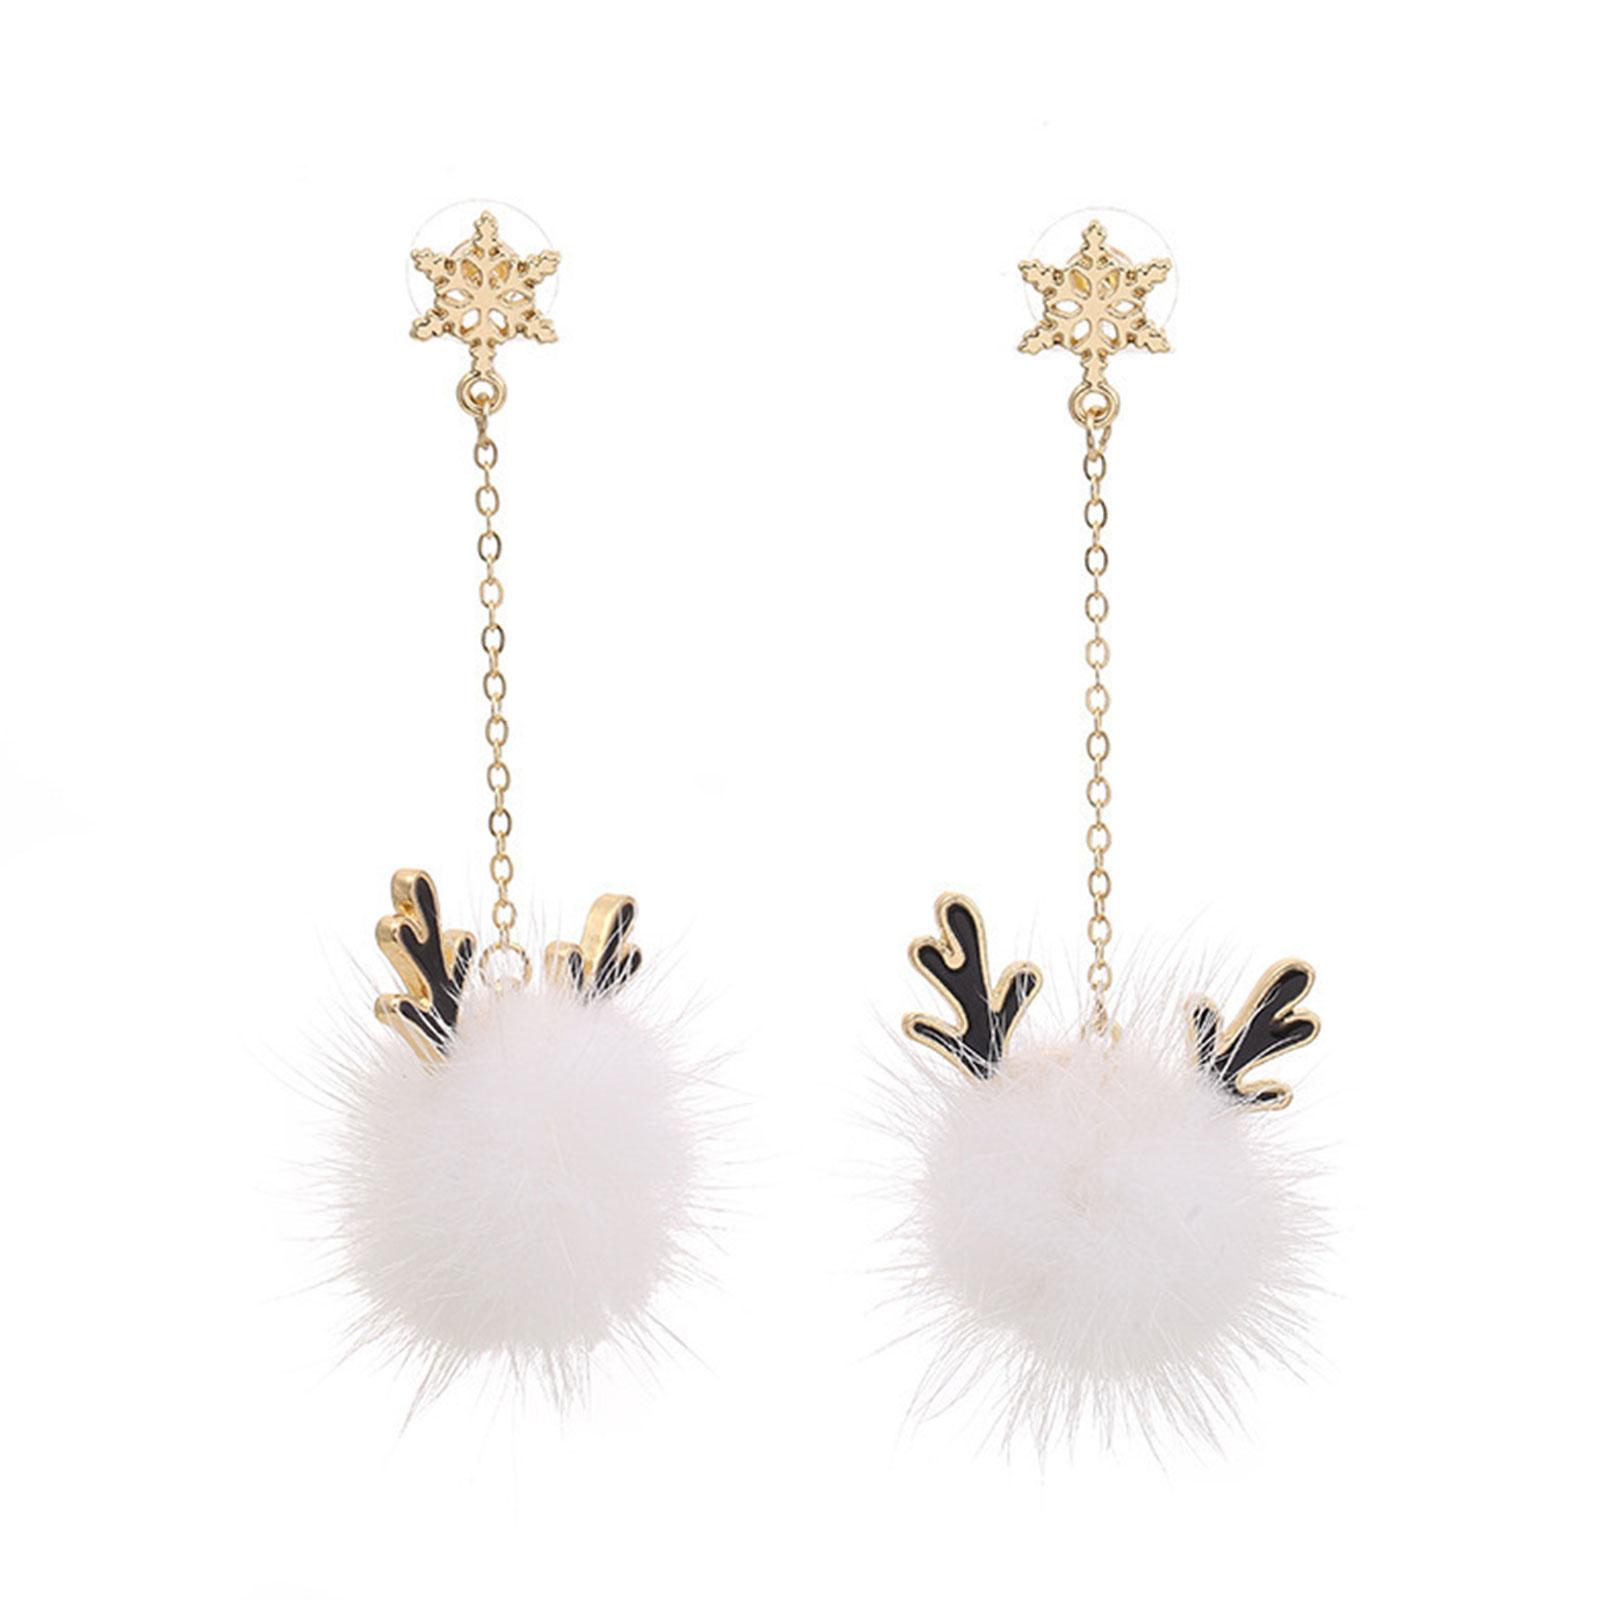 LIUZHIPENG Pom Pom Earrings for Women Girls Cute Snowflake Antler Pompom Dangle Earring Pierced Ear Stud Drops Christmas Xmas Holiday Jewelry G2Q9 - image 1 of 9